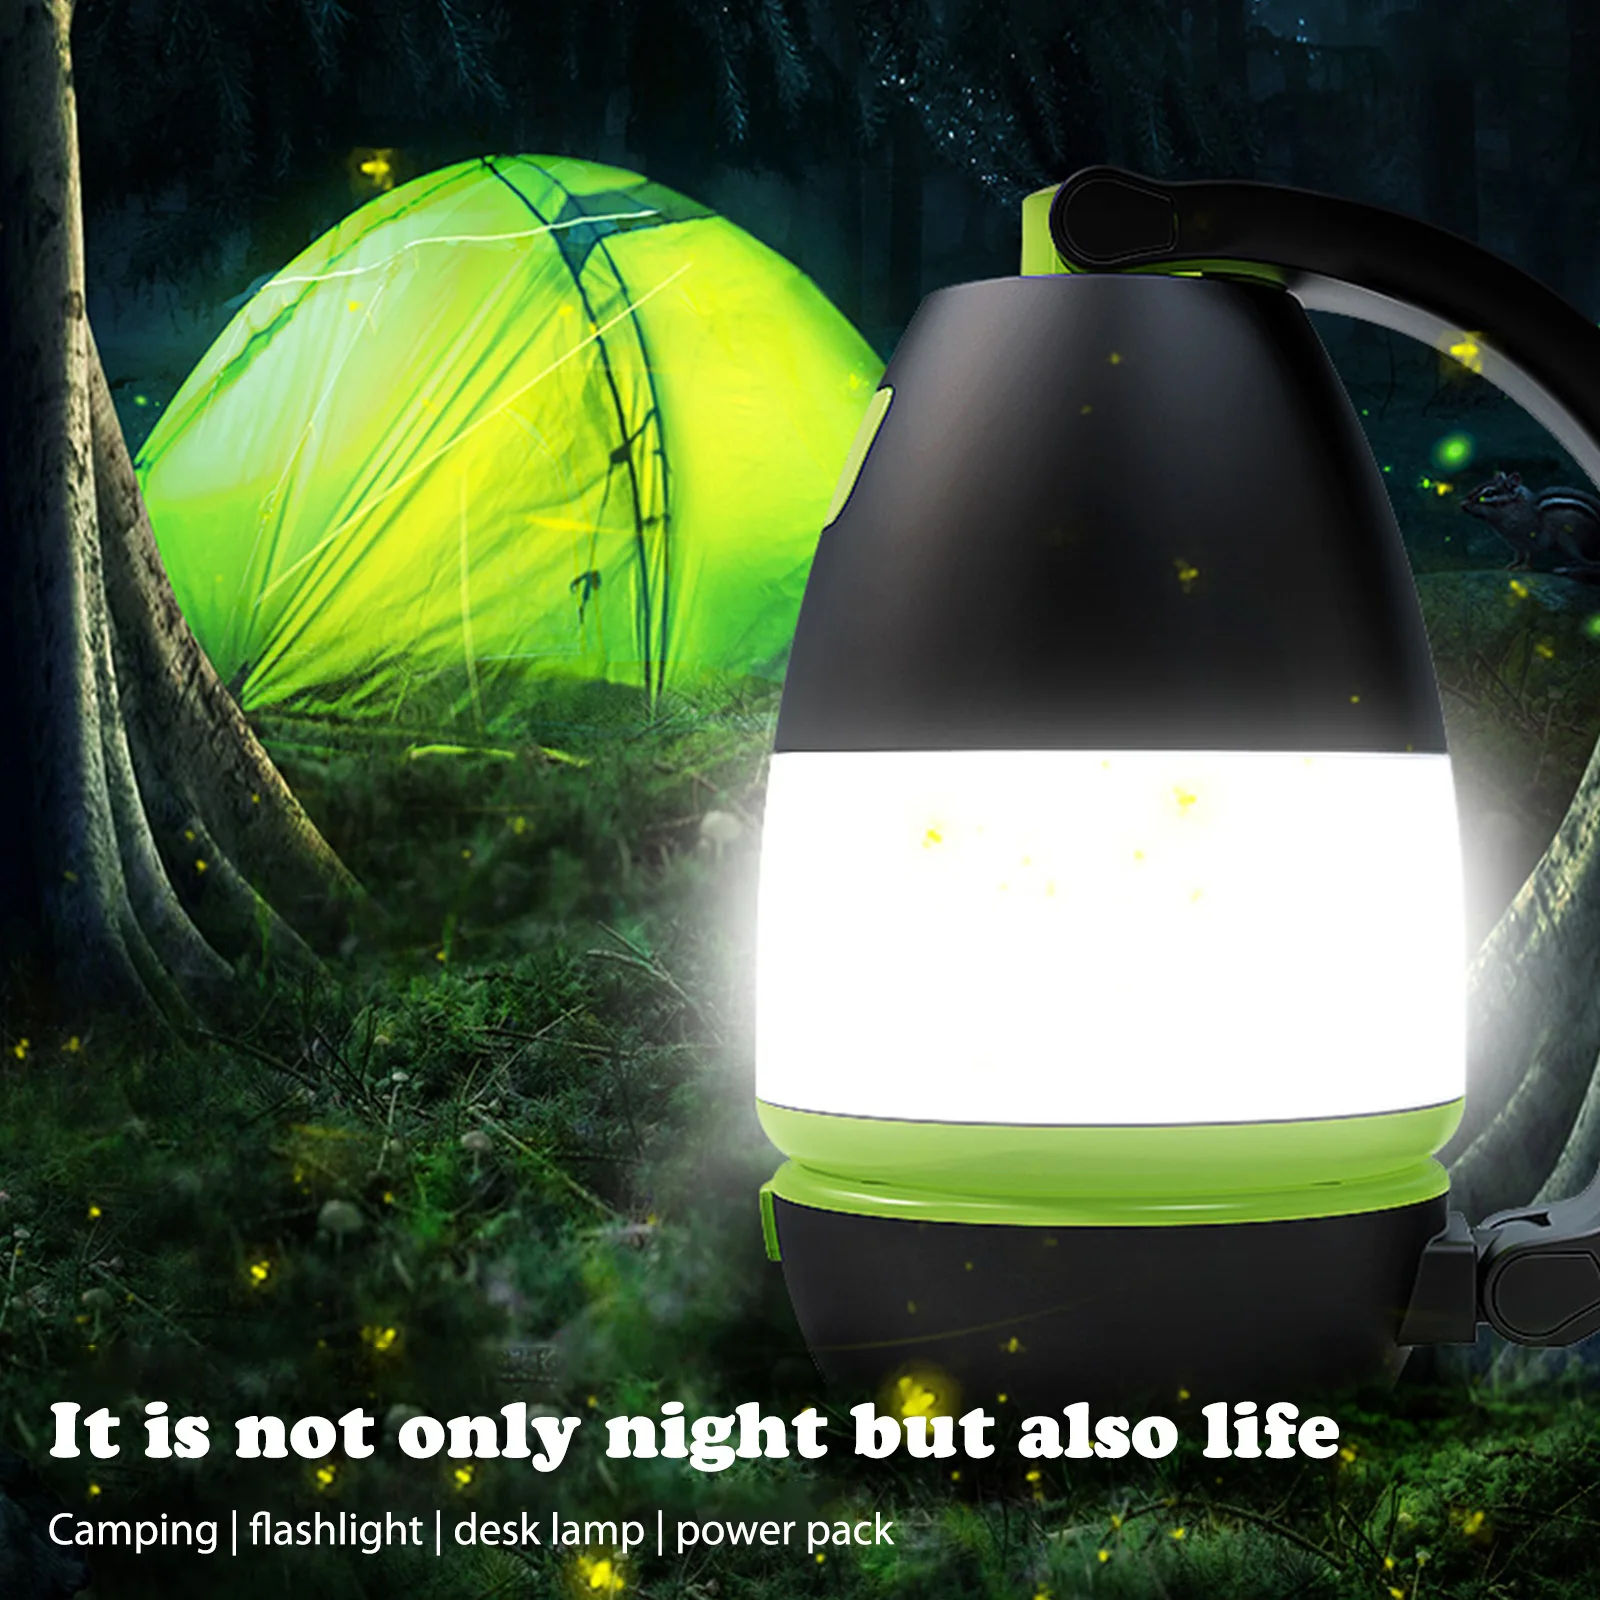 https://ae01.alicdn.com/kf/Sd5169c51d664480c80a05298e2d4806bc/LED-Camping-Tent-Lamp-3-Gears-3-in-1-Tent-Emergency-Lights-USB-Charging-IPX45-Waterproof.jpg